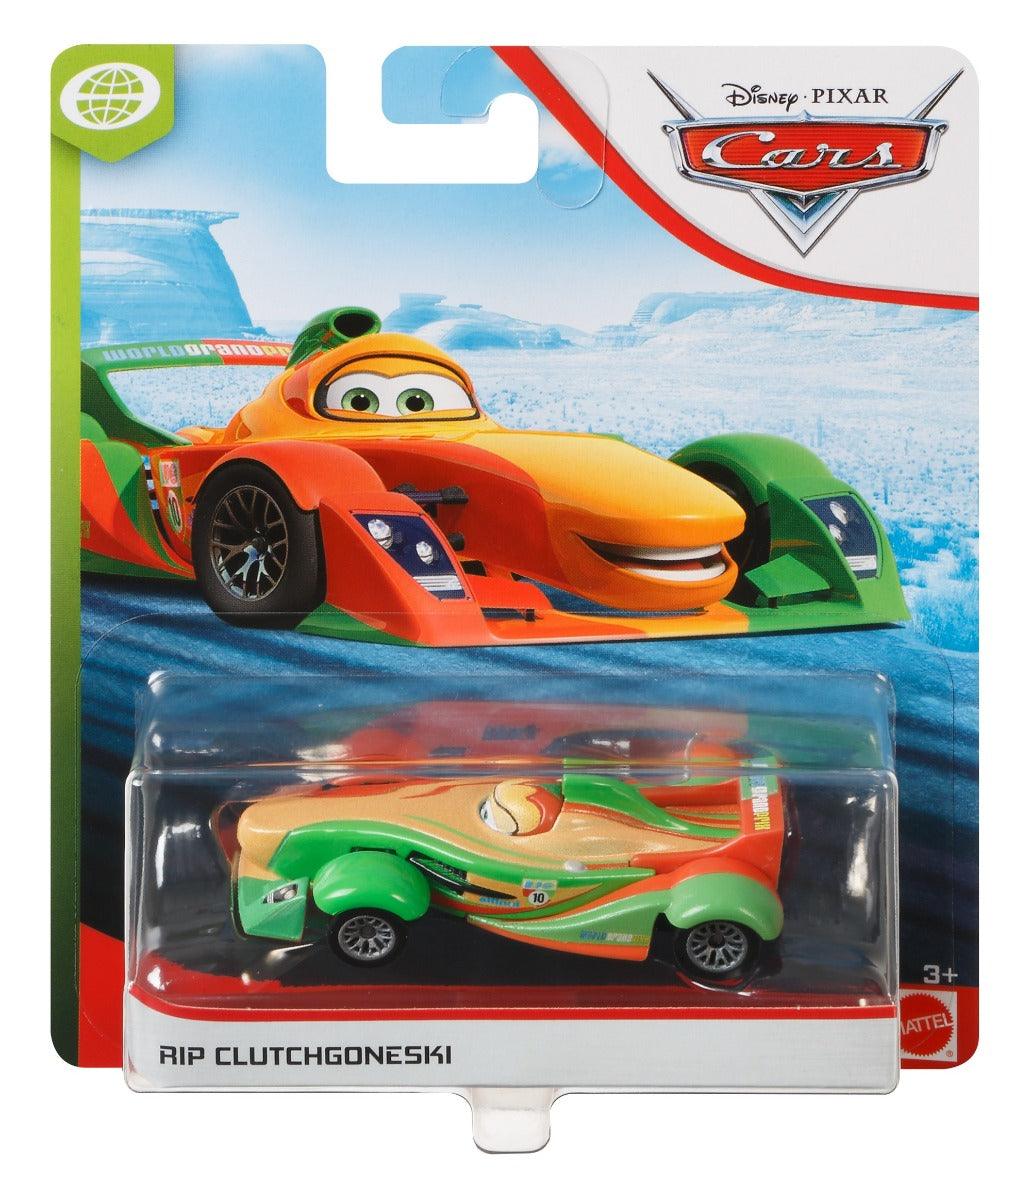 Disney Pixar Cars Rip Clutchgoneski